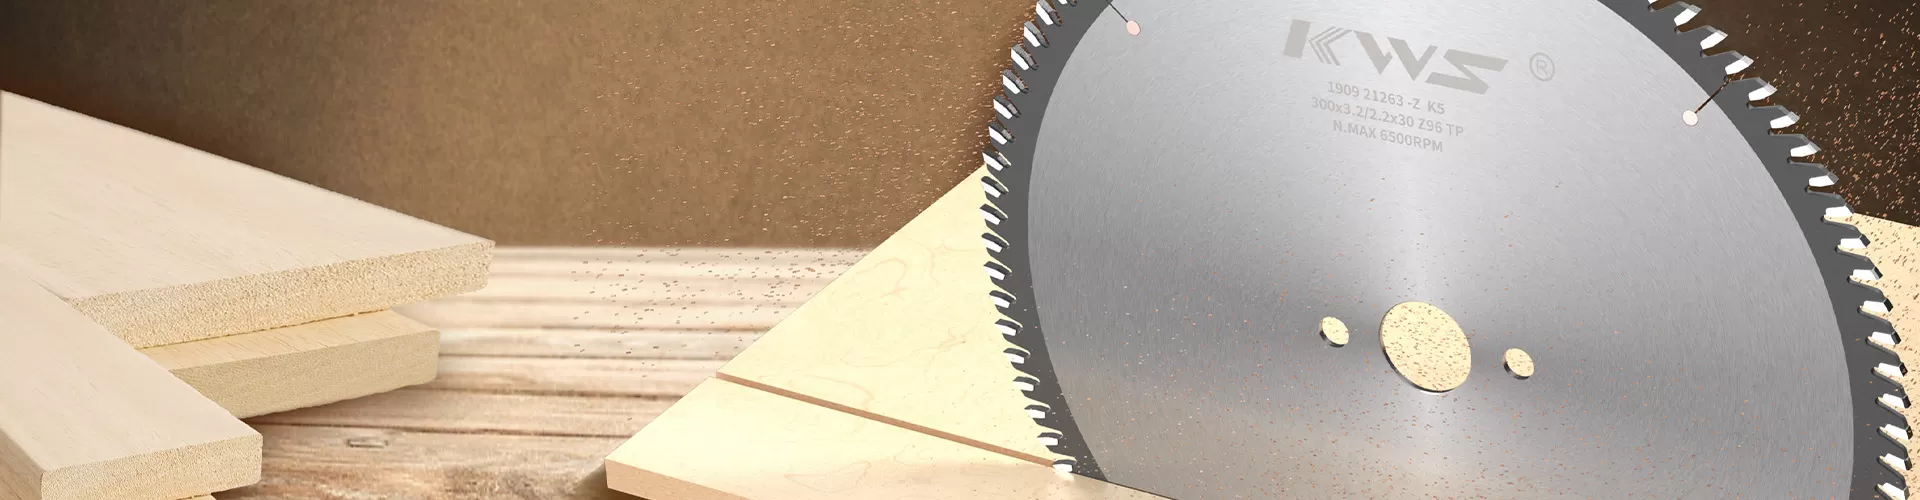 Groving Saw Blade for Aluminum Processing